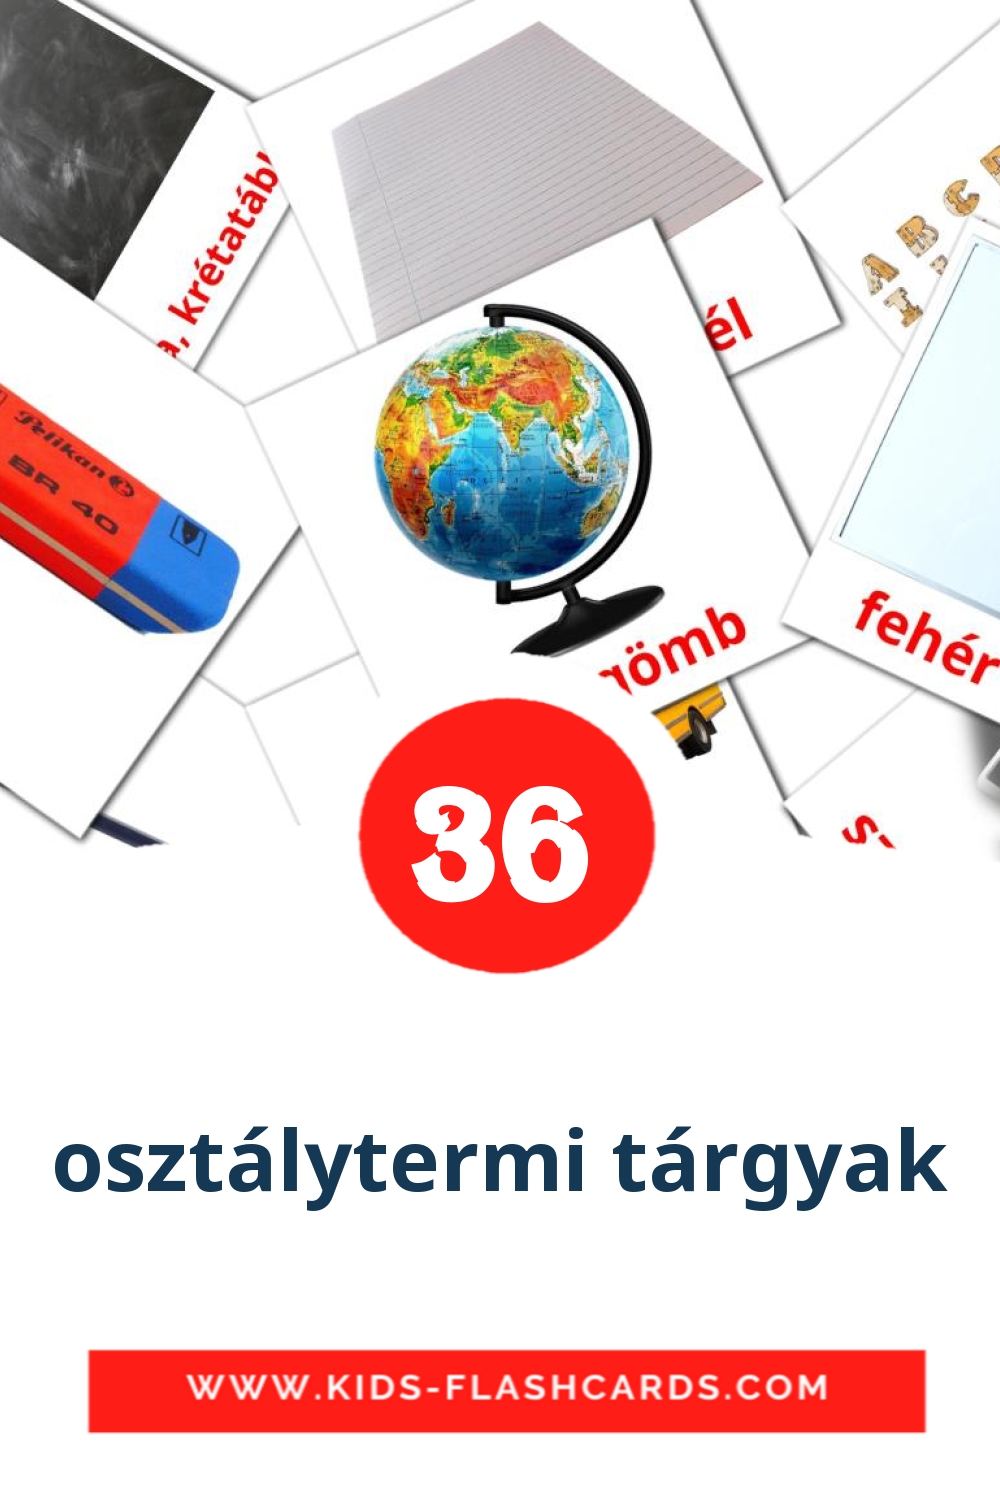 36 cartes illustrées de osztálytermi tárgyak pour la maternelle en hongrois